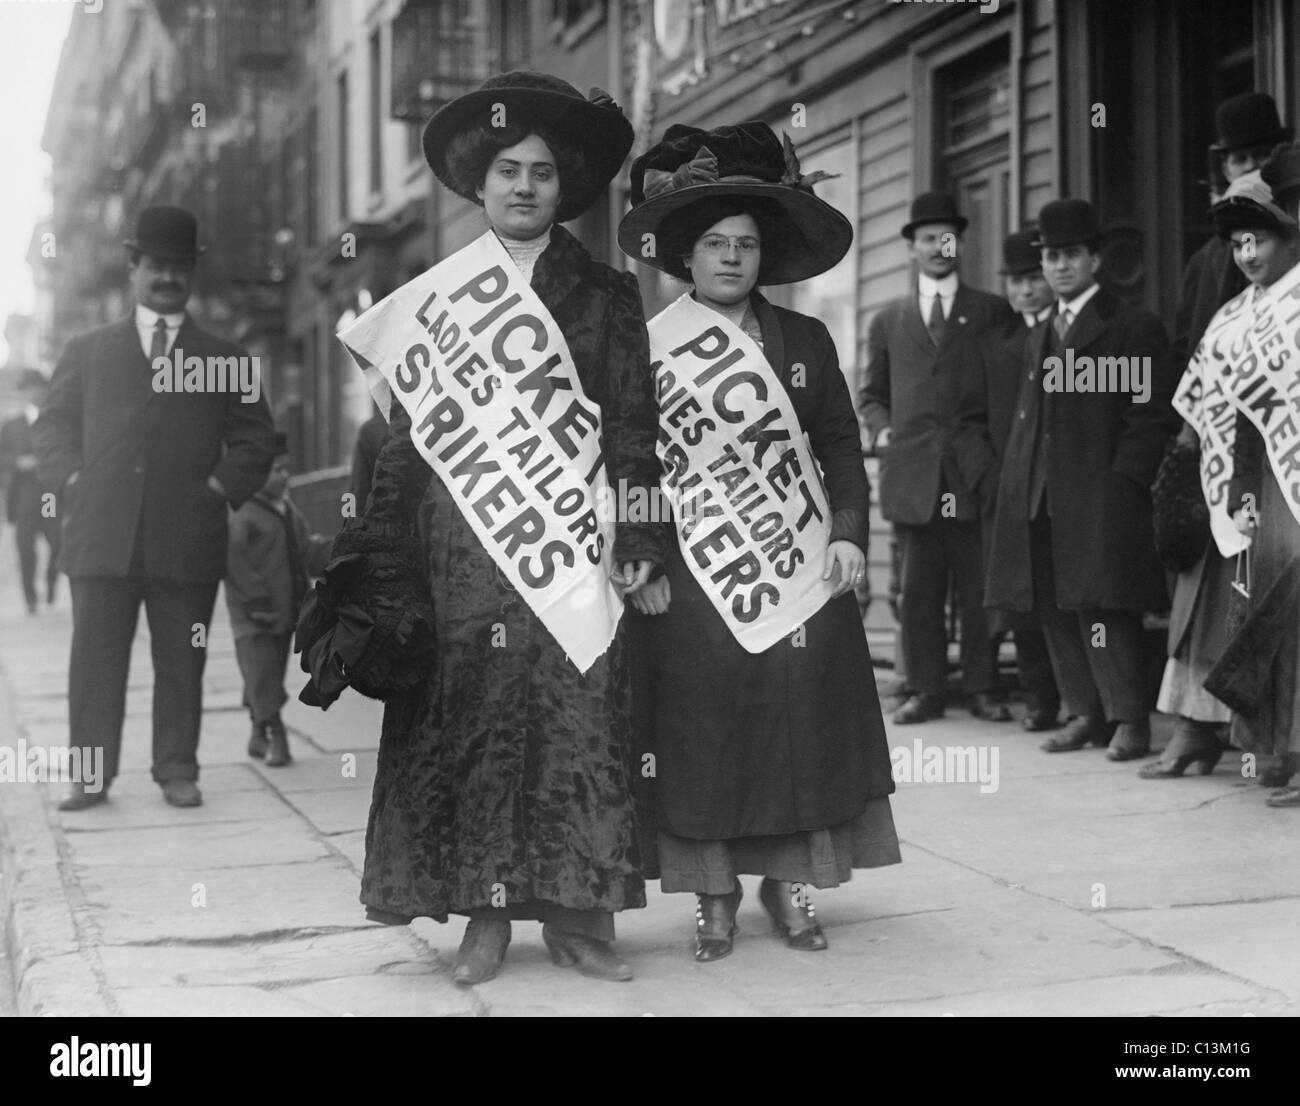 Women strike pickets from Ladies Tailors, during the New York shirtwaist strike of 1909, involving 20,000 mostly Jewish women working in shirtwaist sweatshops. Stock Photo